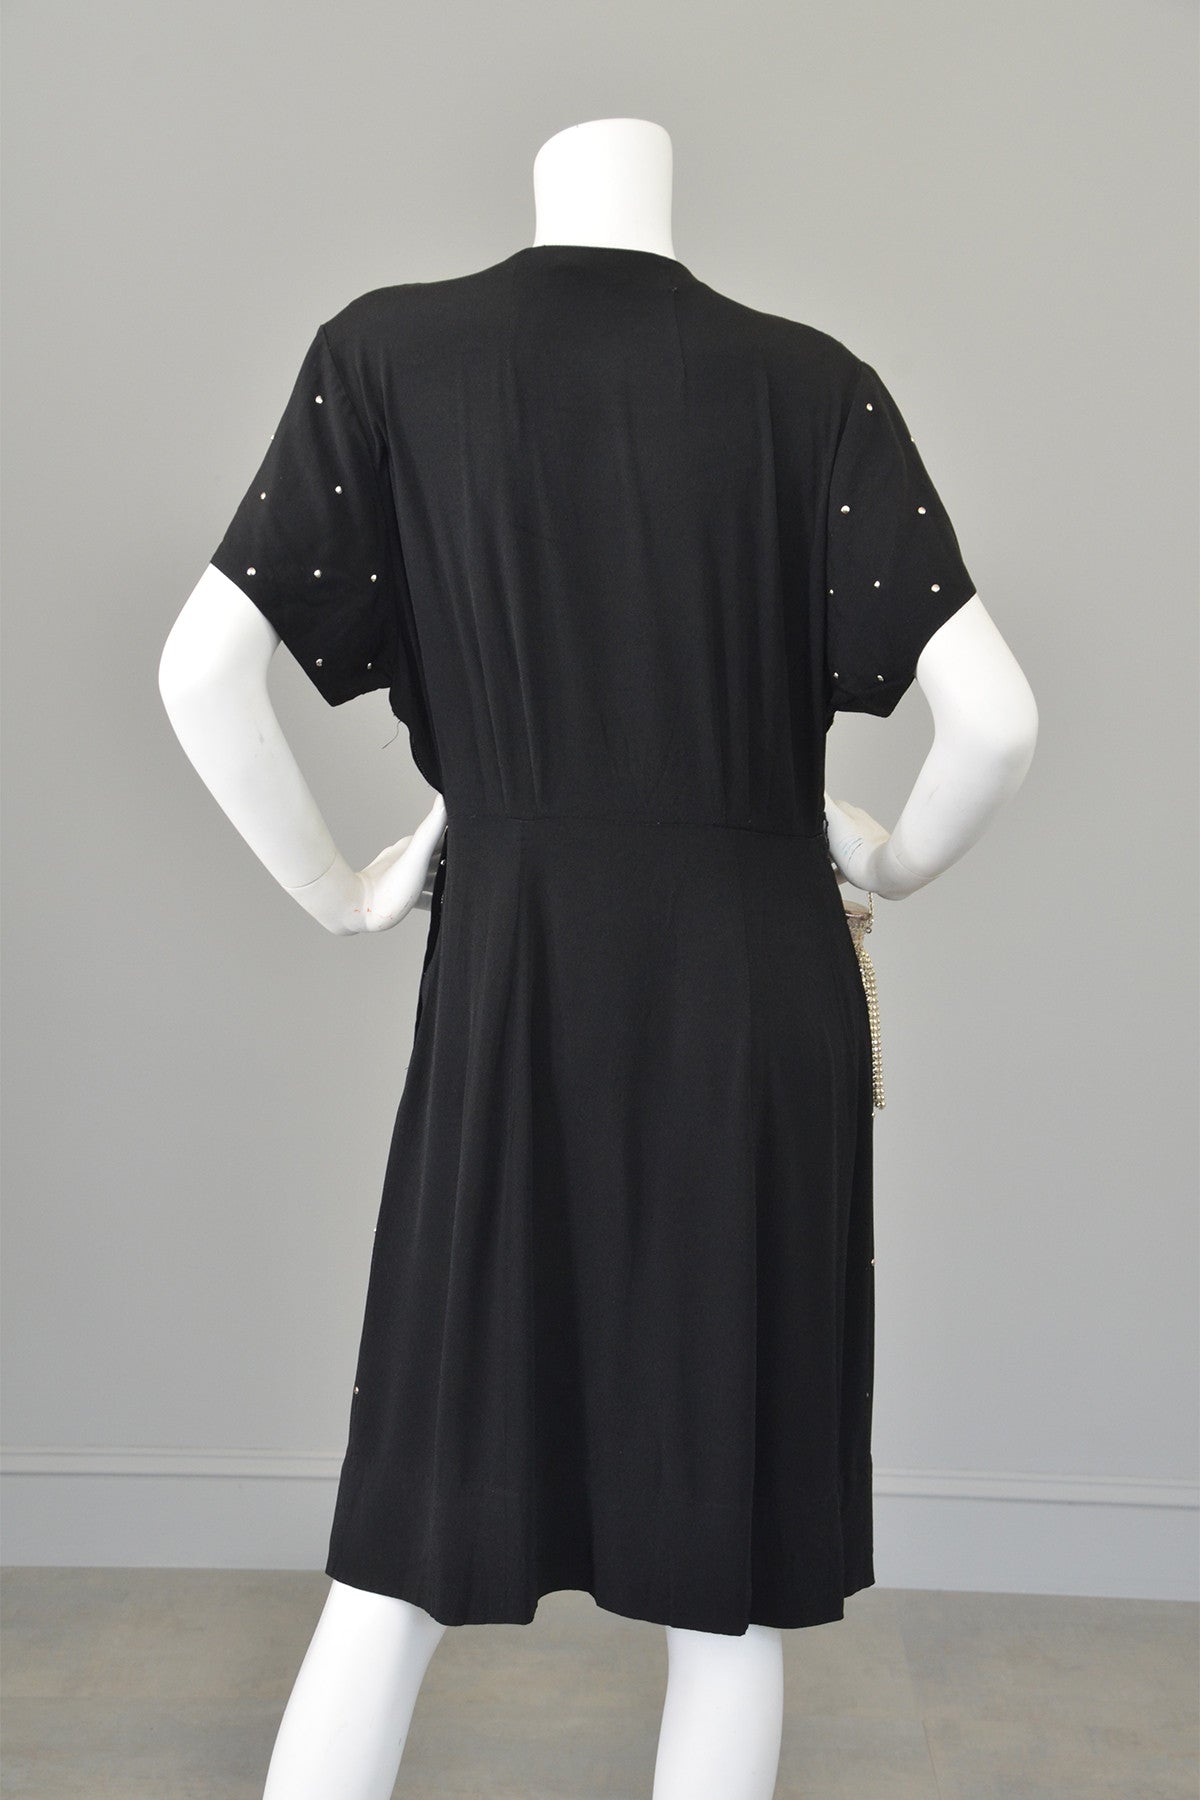 1930s 40s Studded Black Crepe Keyhole Neckline Vintage Dress,  Size L